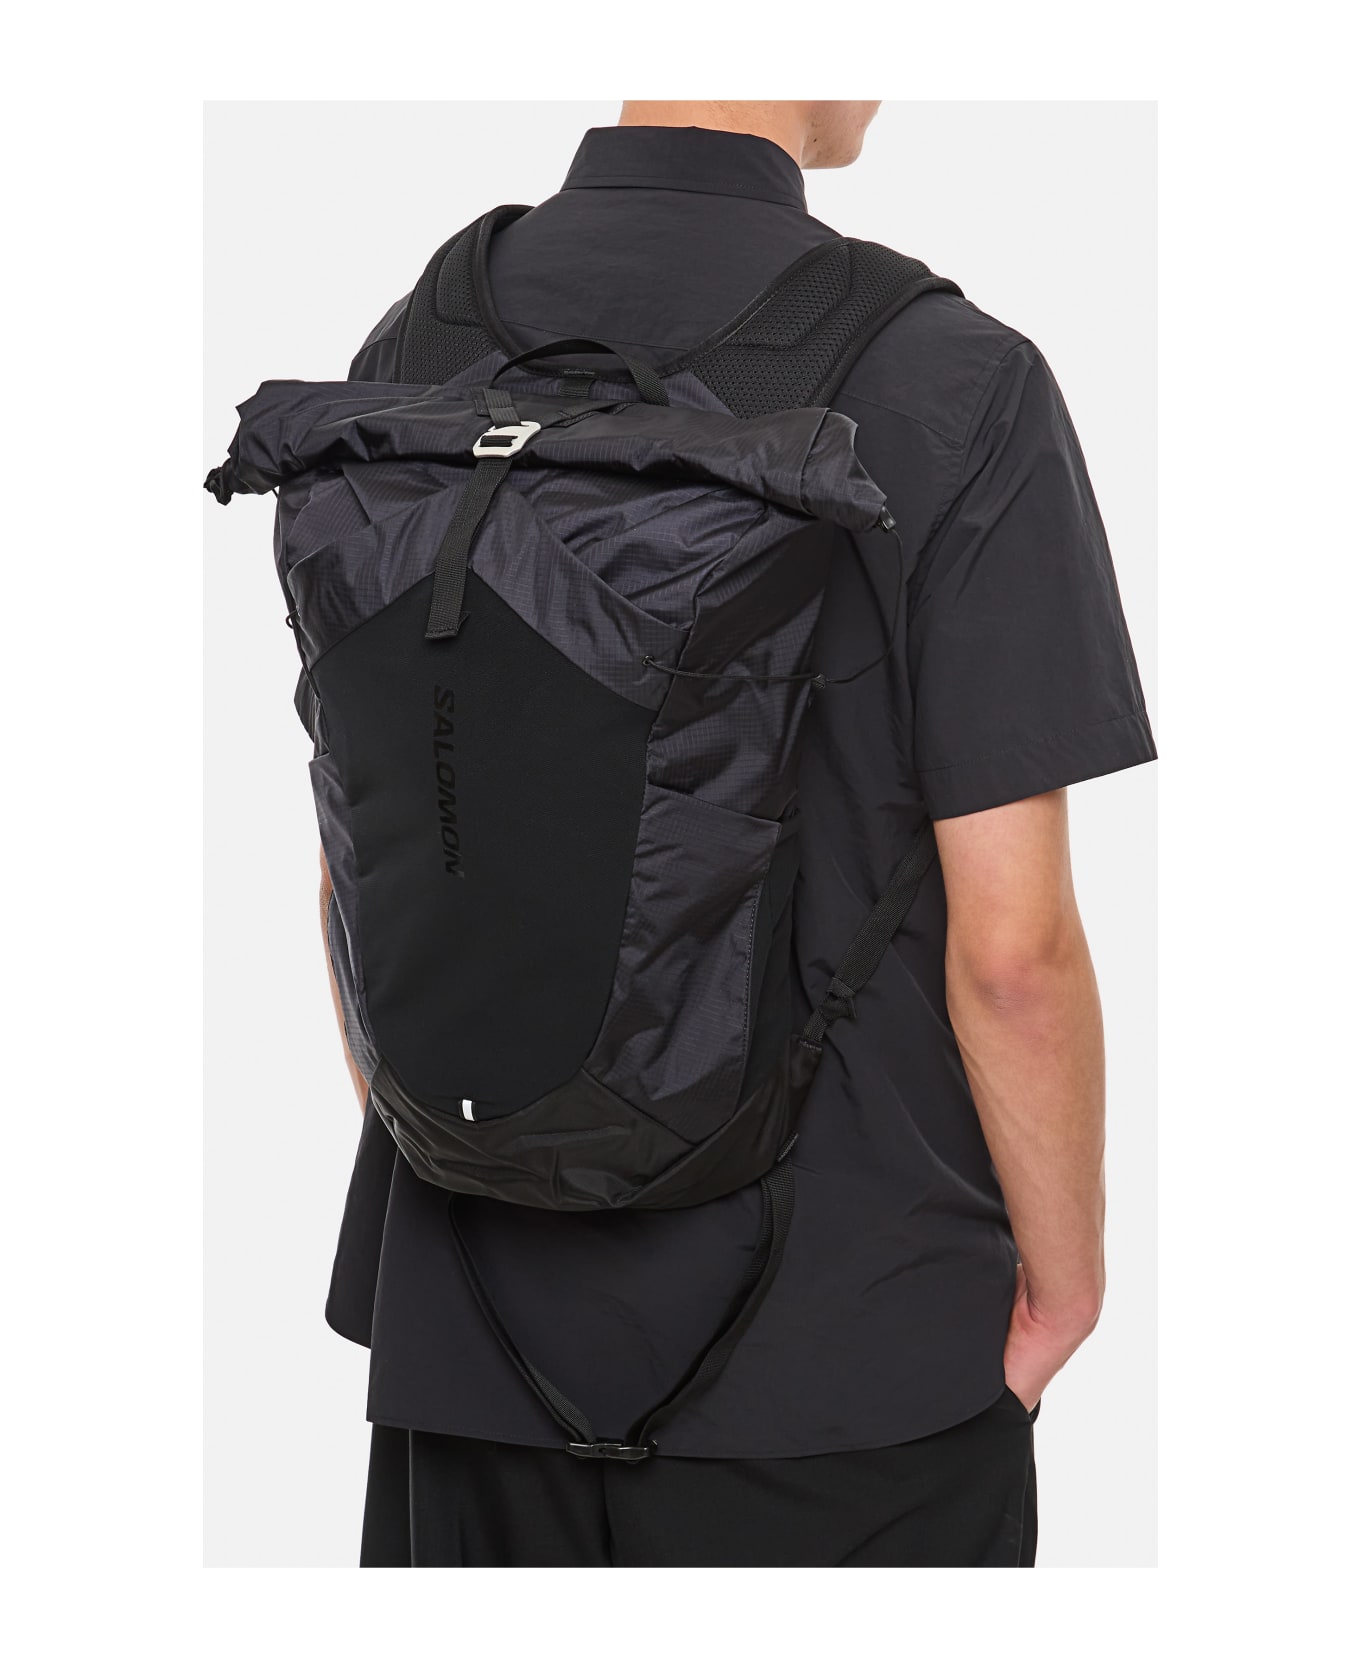 Salomon Acs 20 Backpack - Black